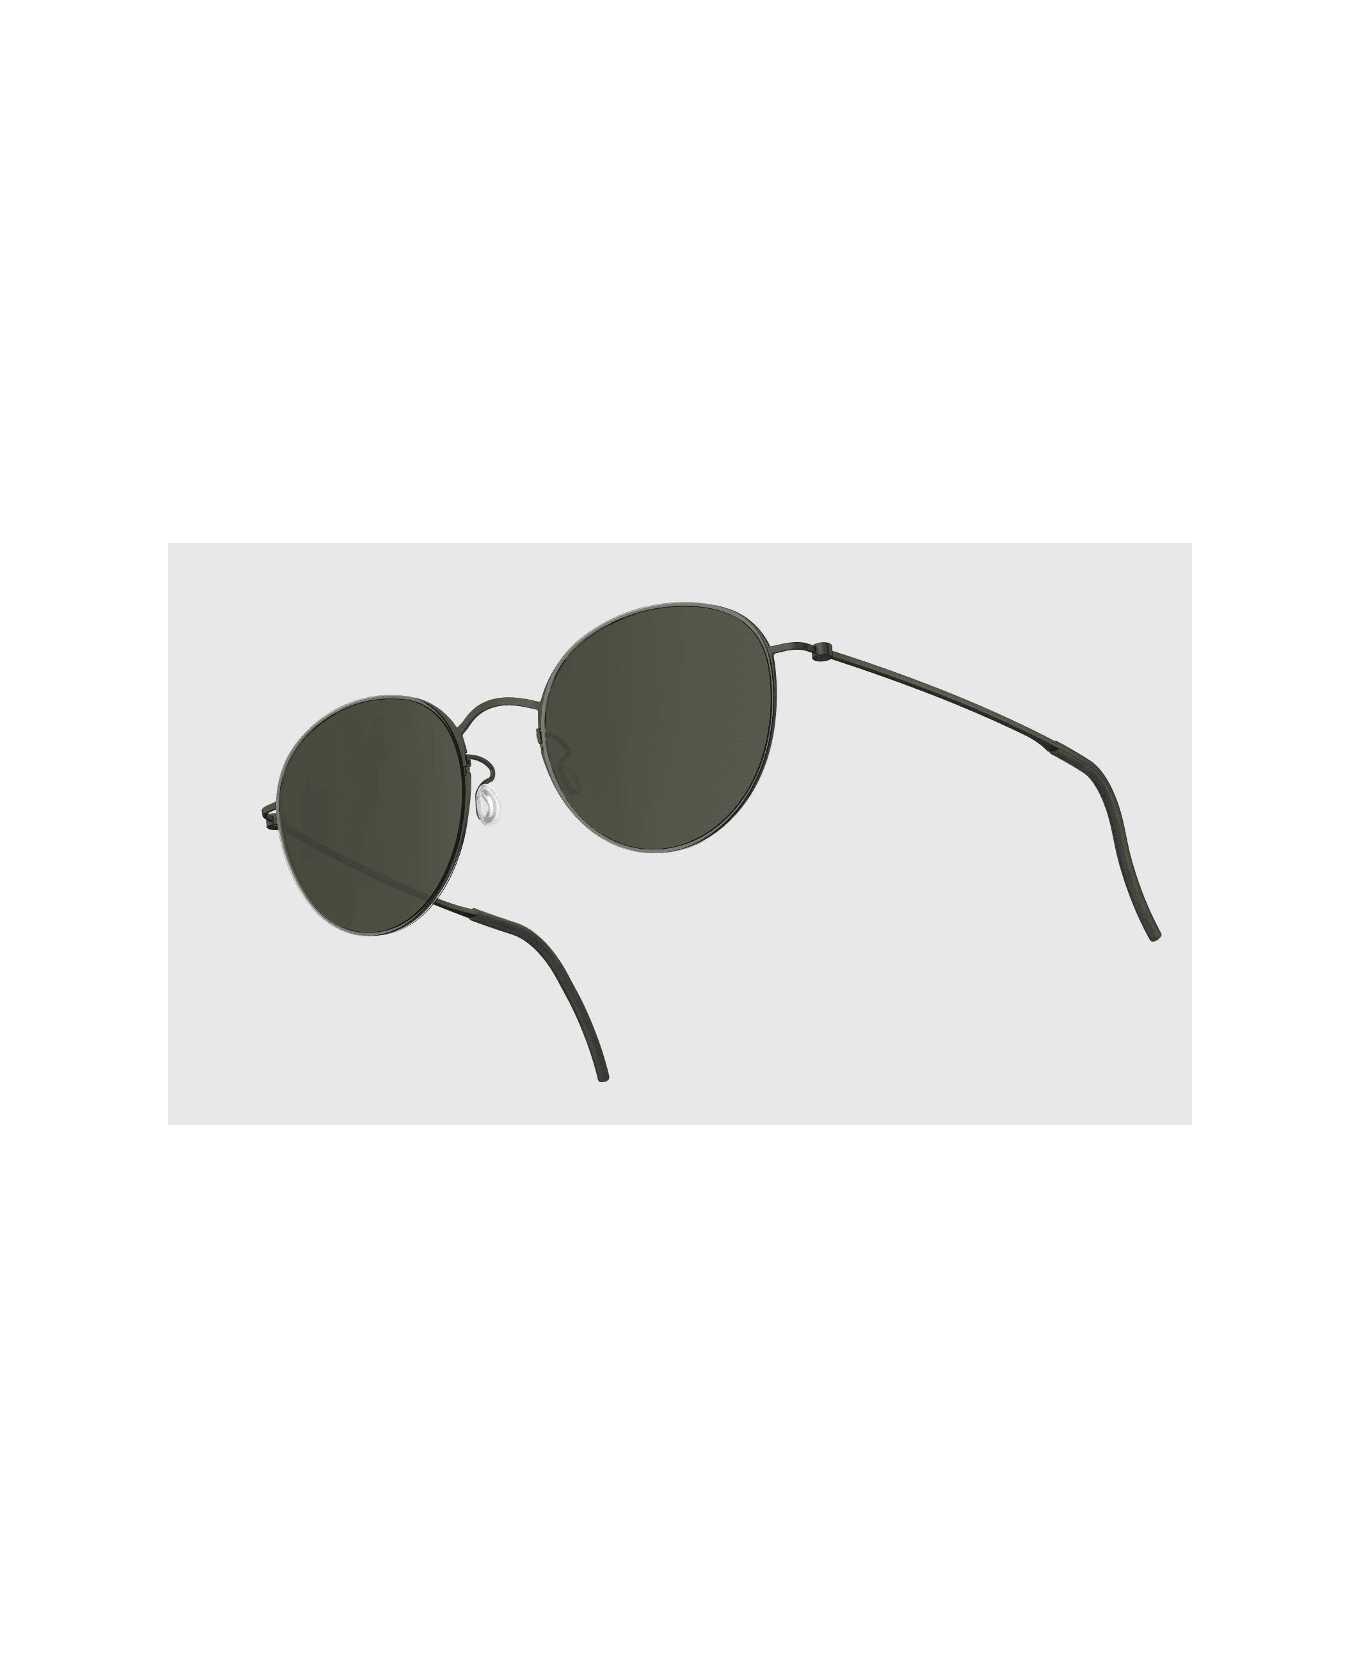 LINDBERG SR 8807 Sunglasses